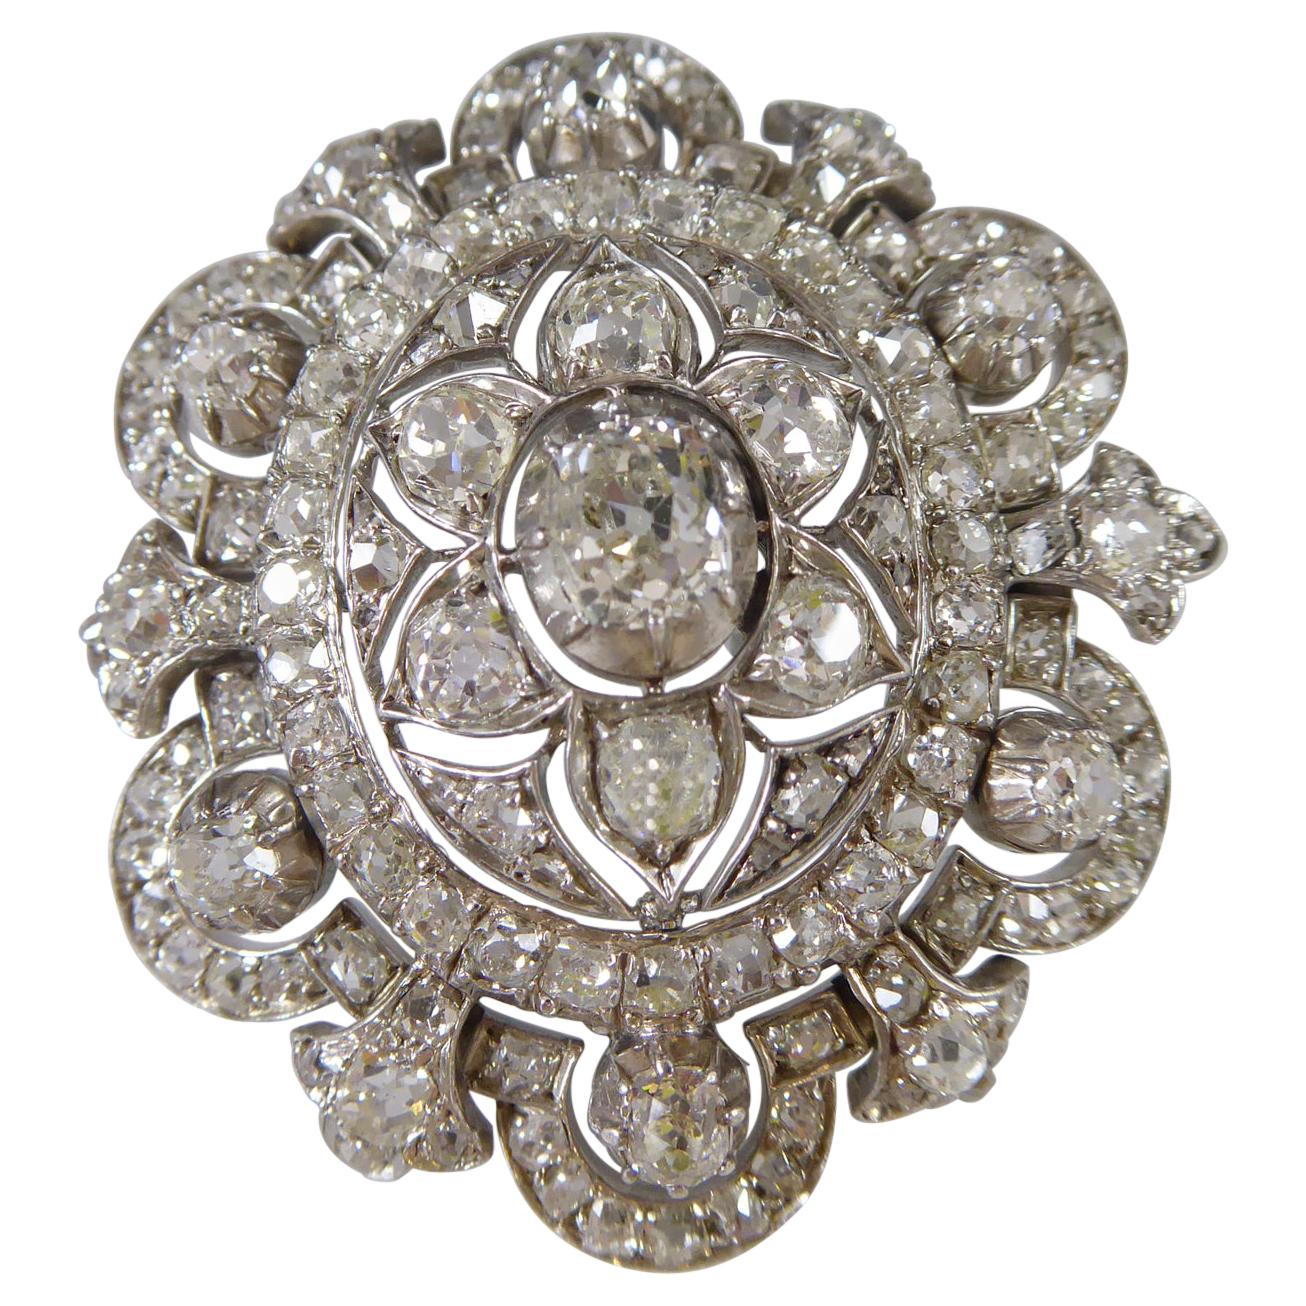 Antique Victorian 6.00 Carat Old Cut Diamond Brooch/Pendant, Circa 1880-1900